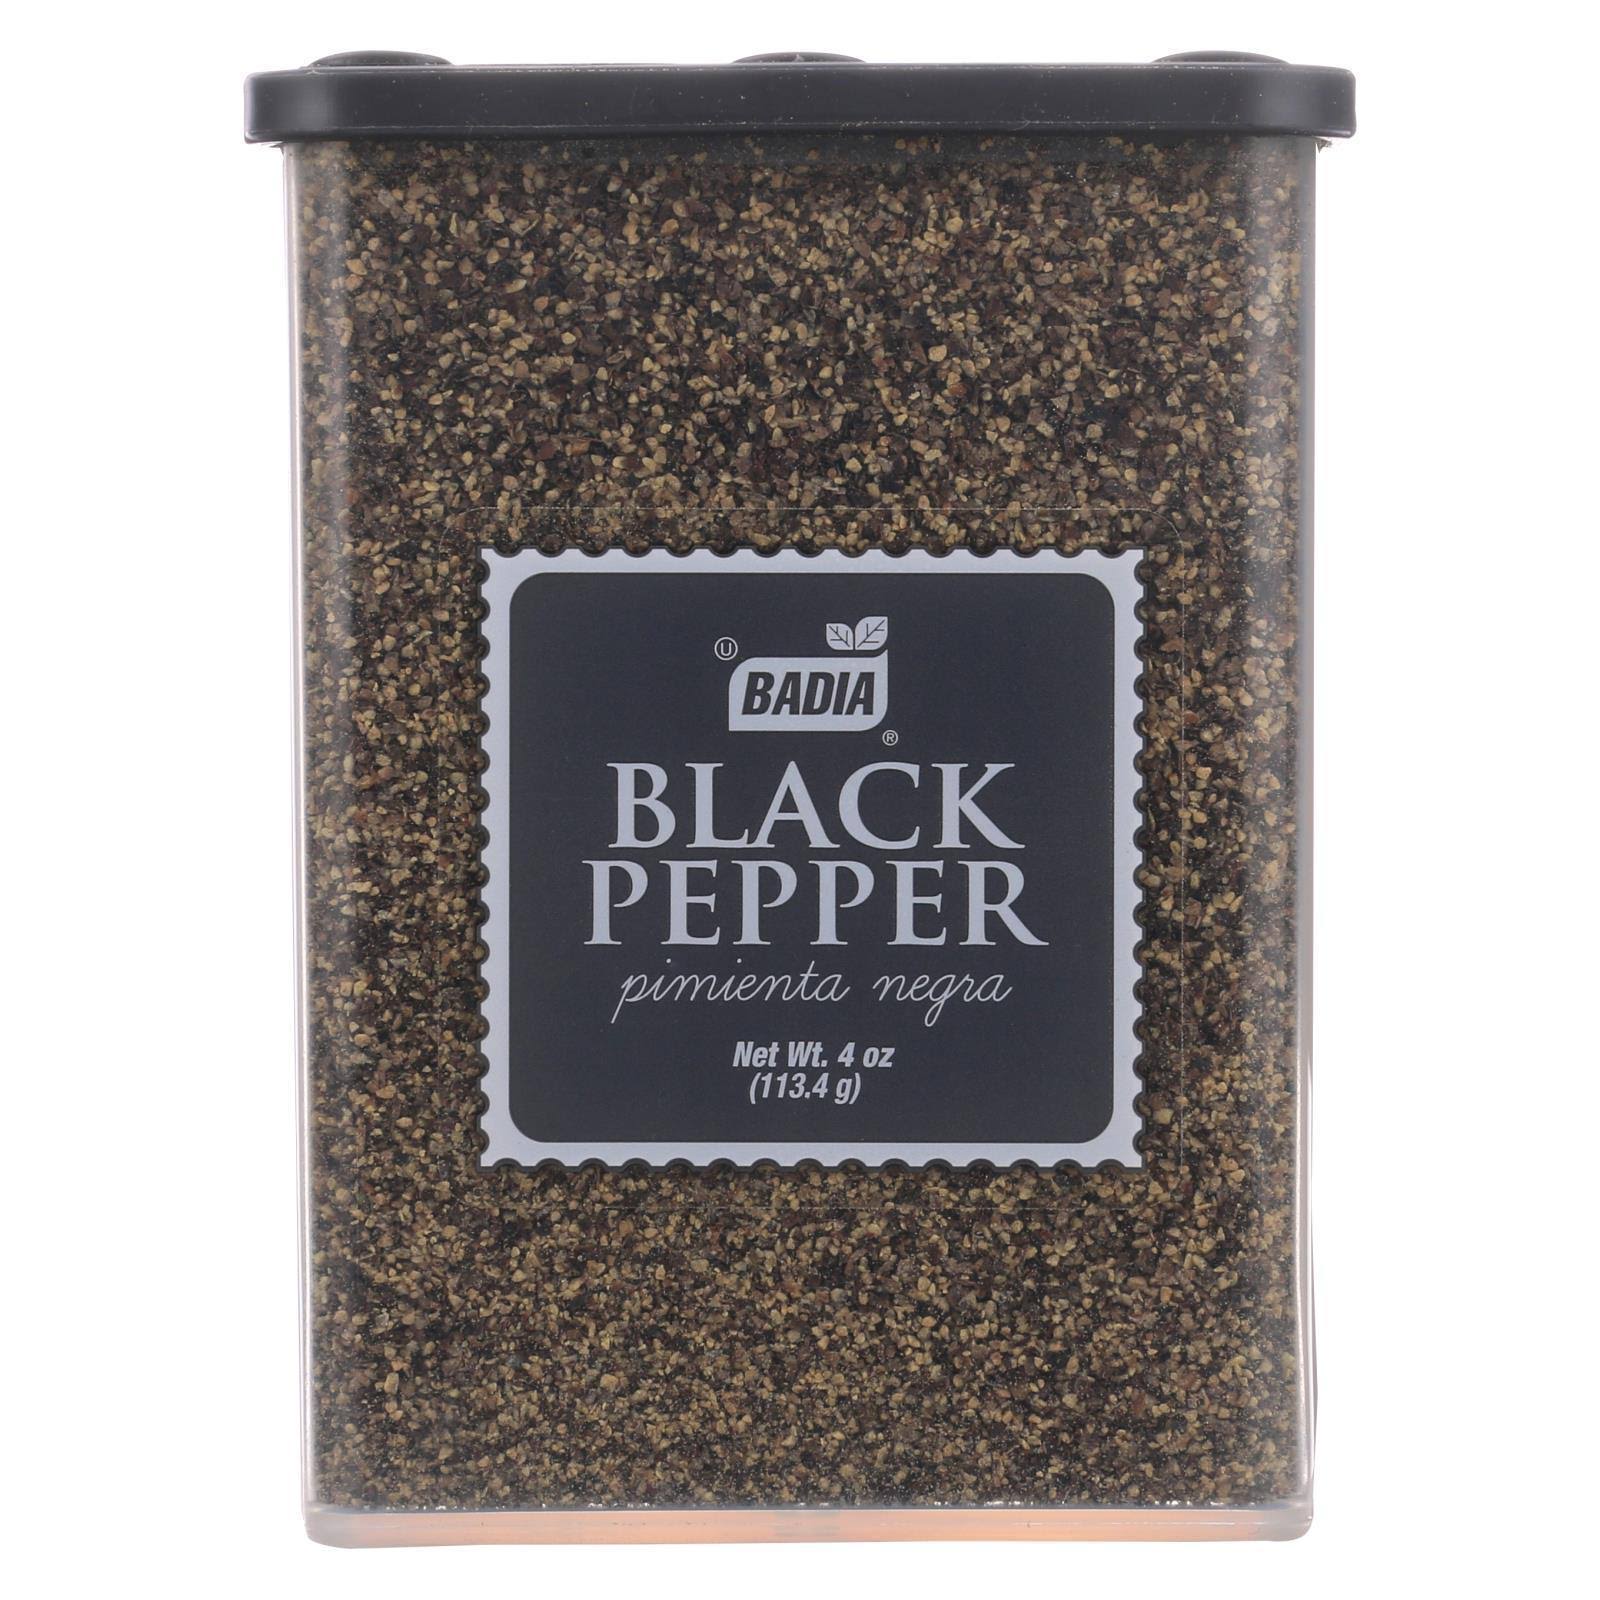 Badia Ground Black Pepper Can - 4oz